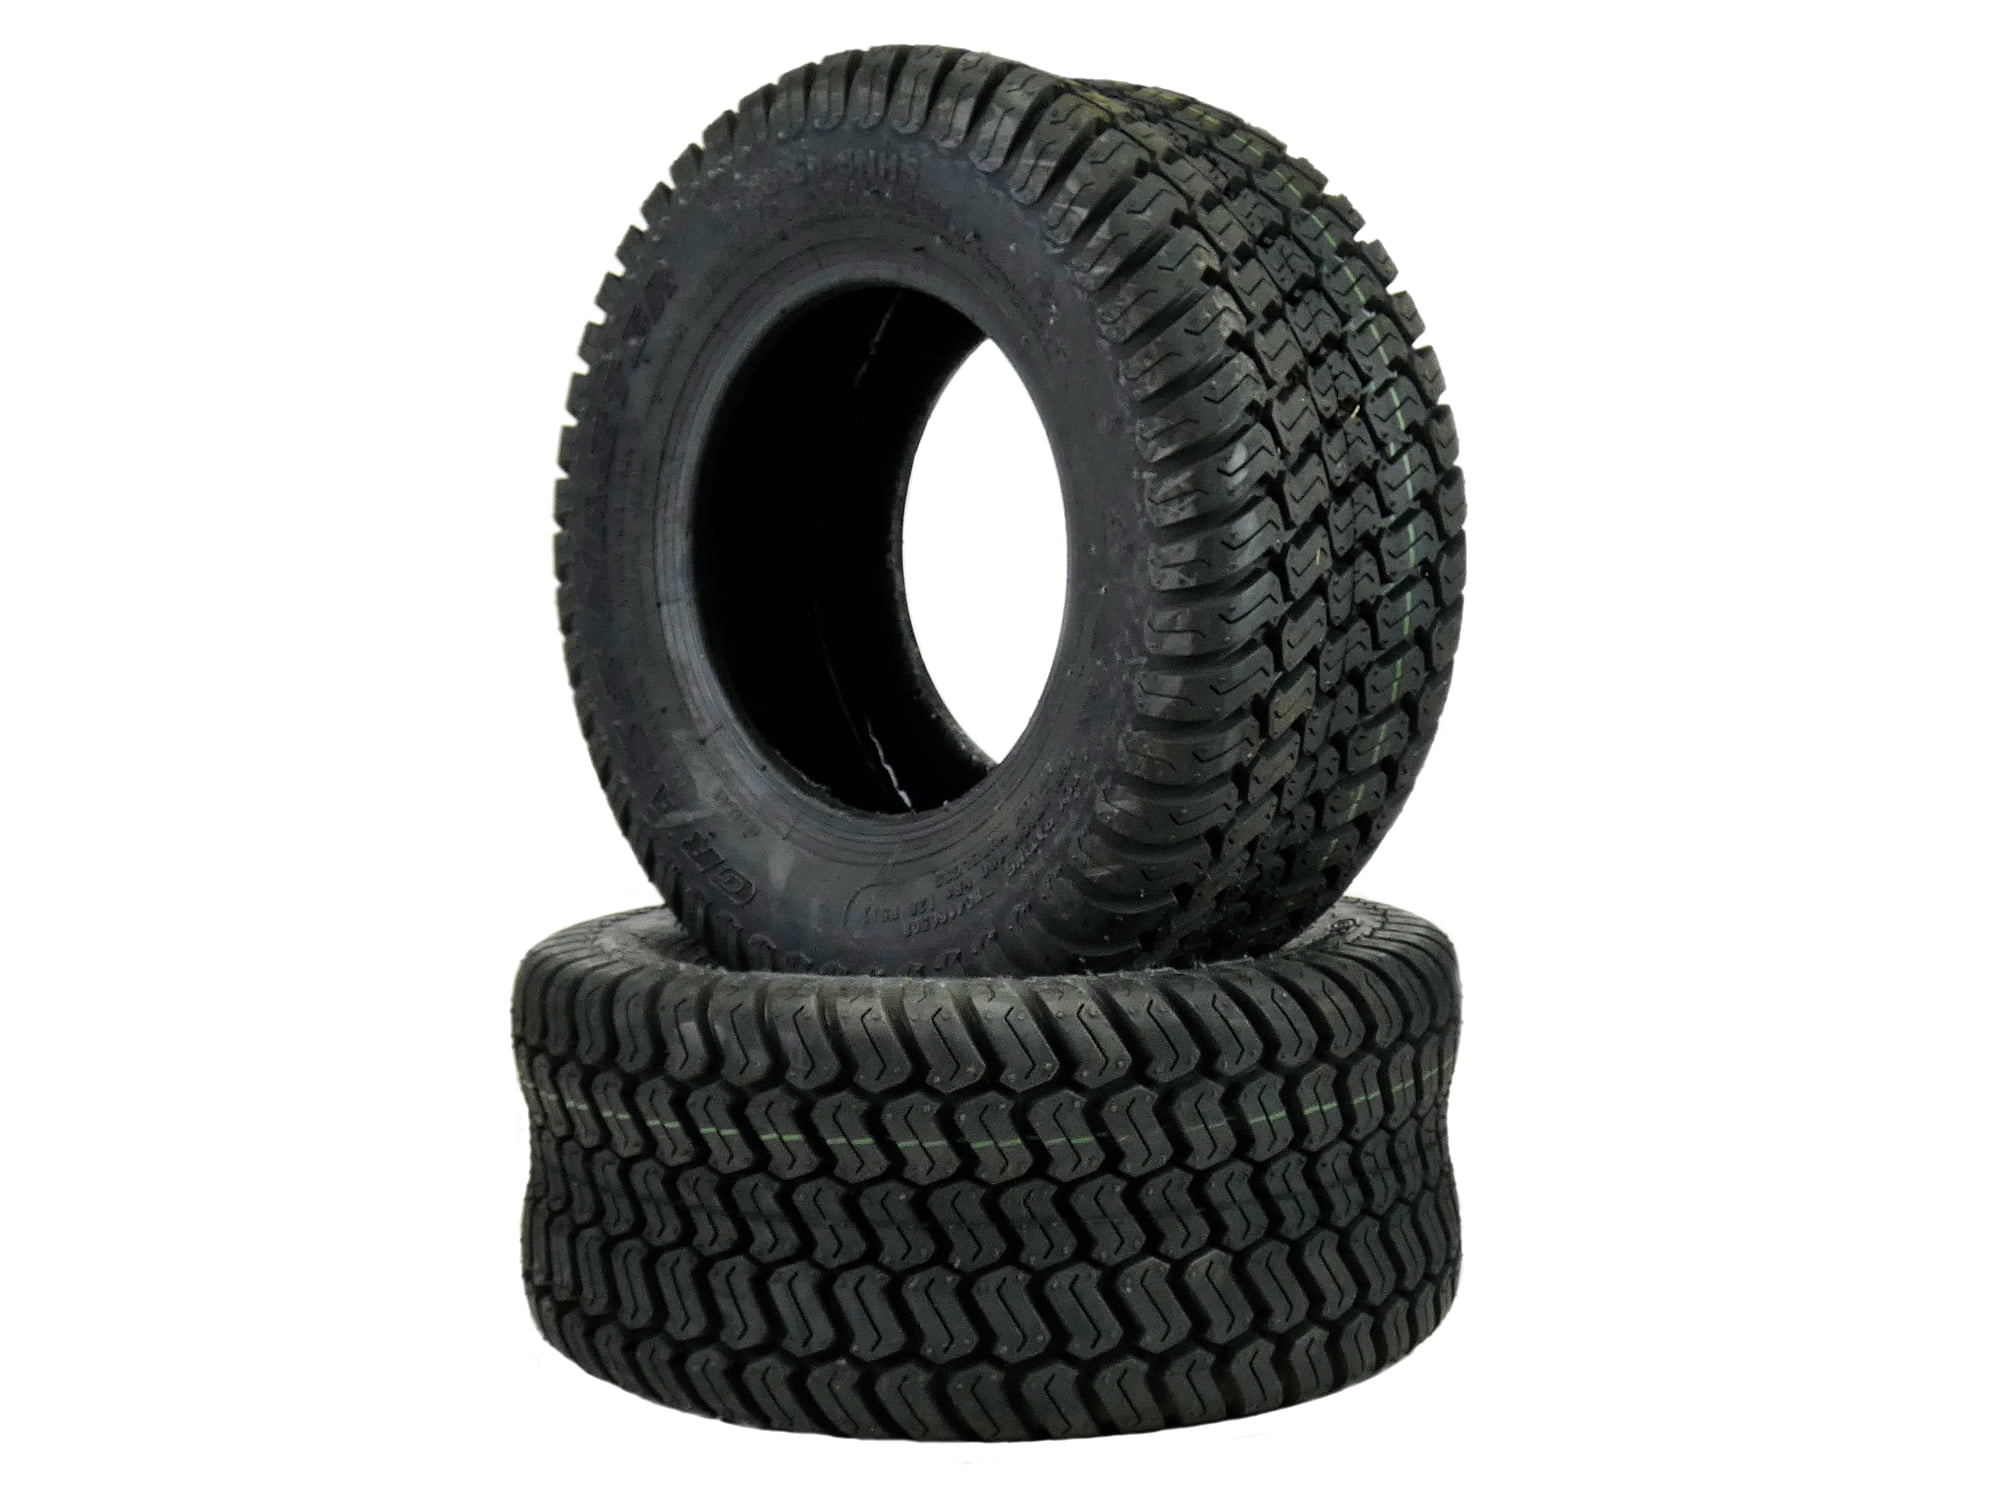 Turf Saver Lawn & Garden Tire Puncture resistant construction 16x6.50-8